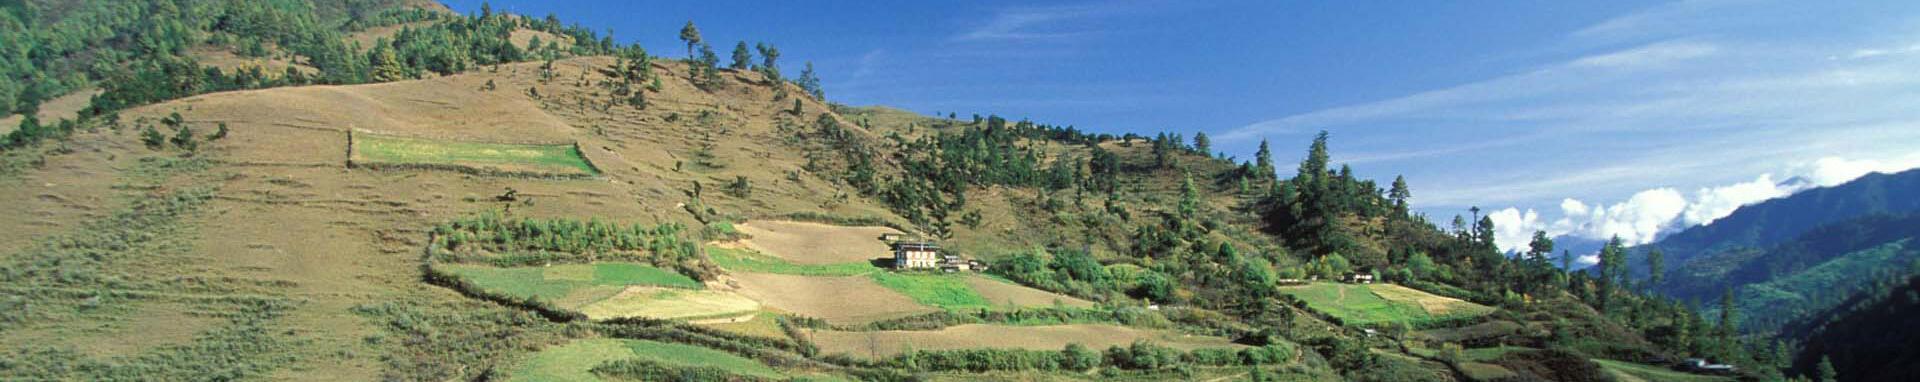 World Bank Photo Collection Landscape of terrace fields and homes Terrace fields. Bhutan. Photo: Curt Carnemark / World Bank